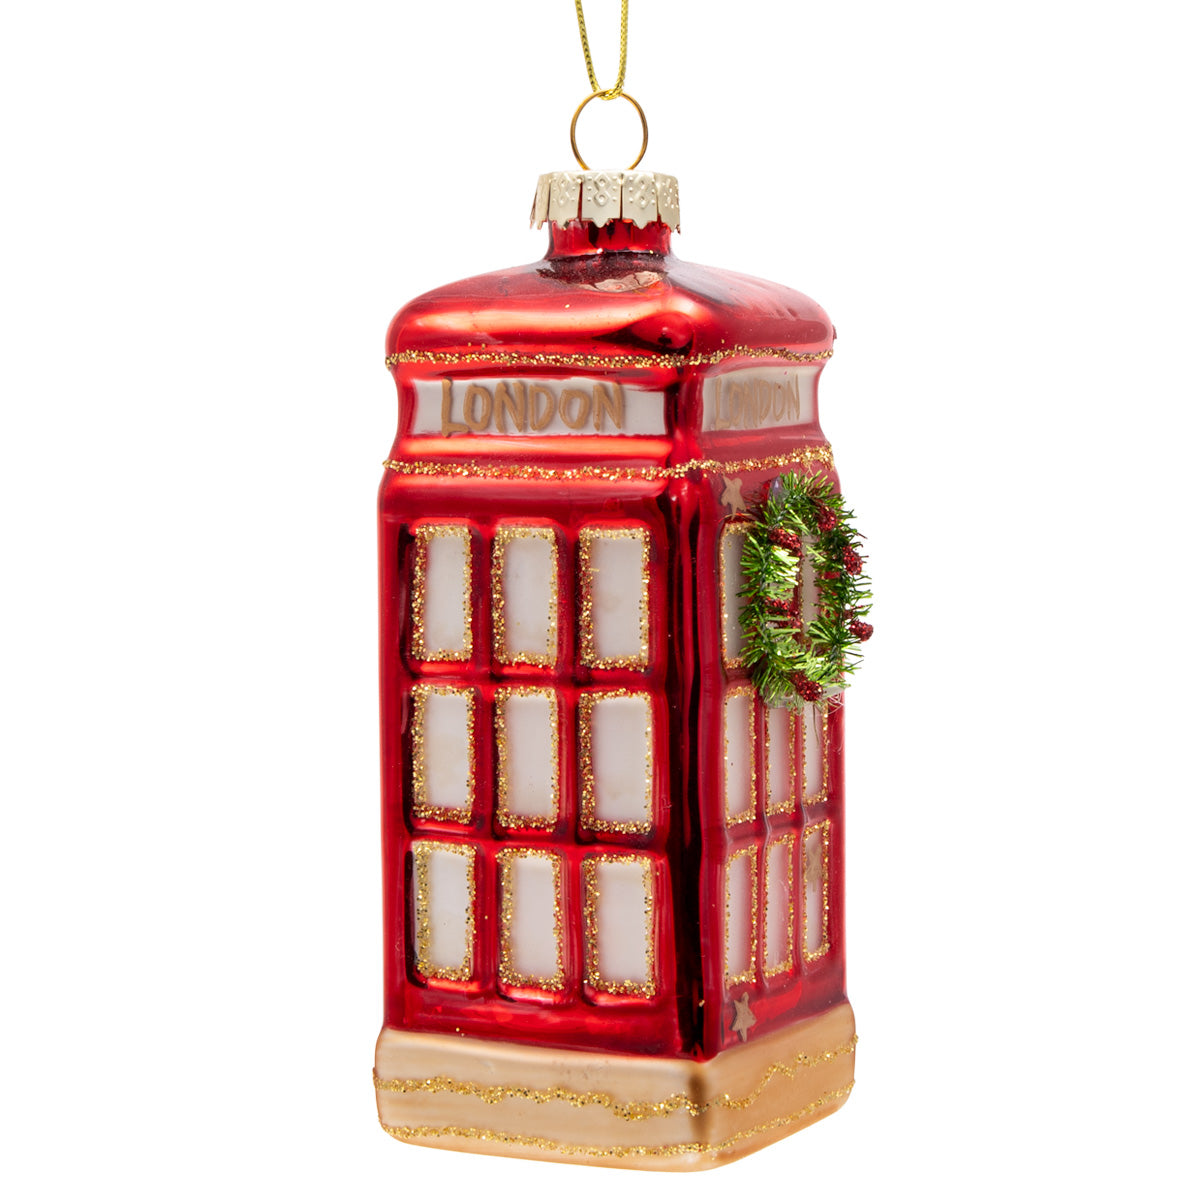 Gisela Graham Glass London Phone Box Christmas Decoration 2